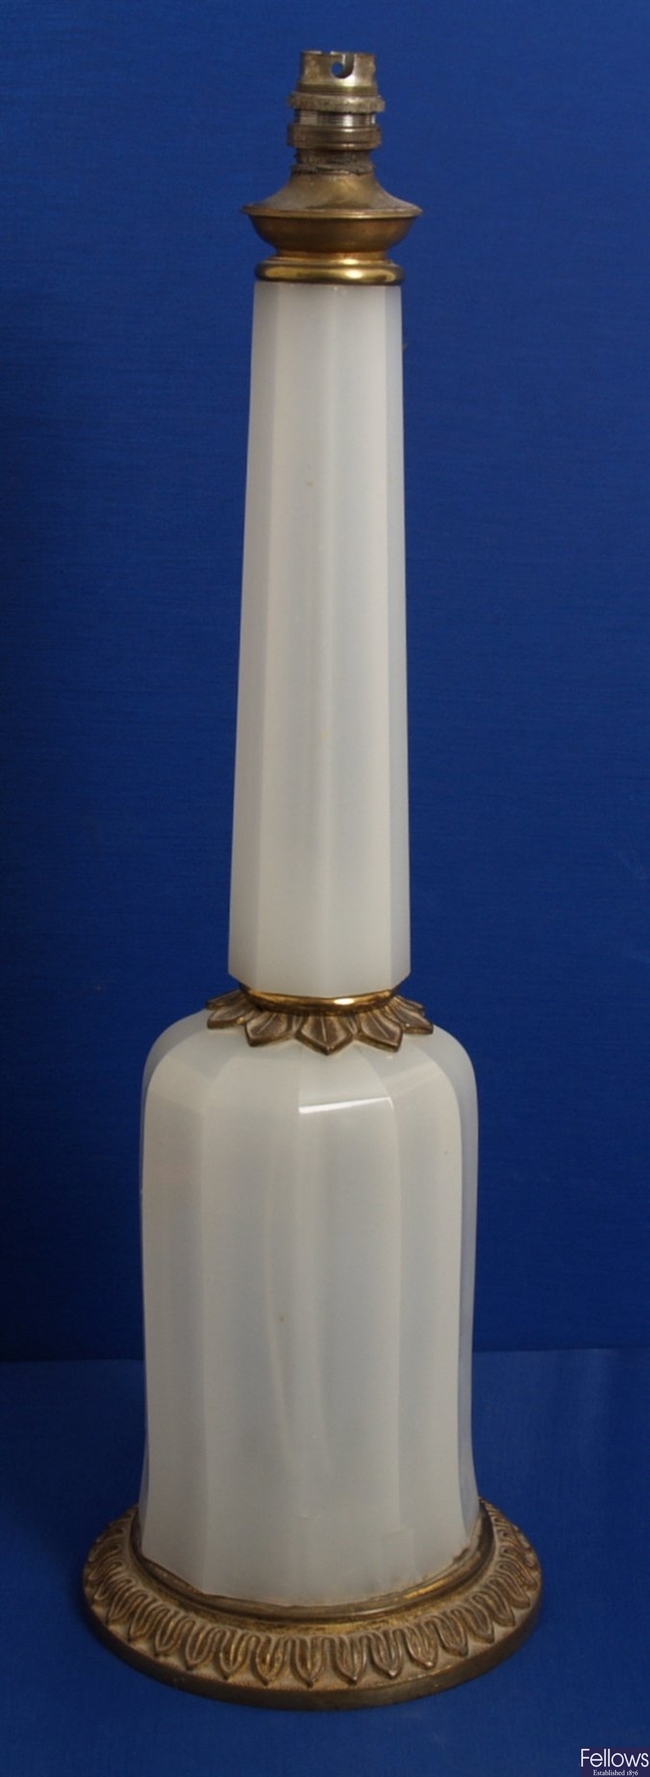 An opaque hexagonal column glass table lamp with